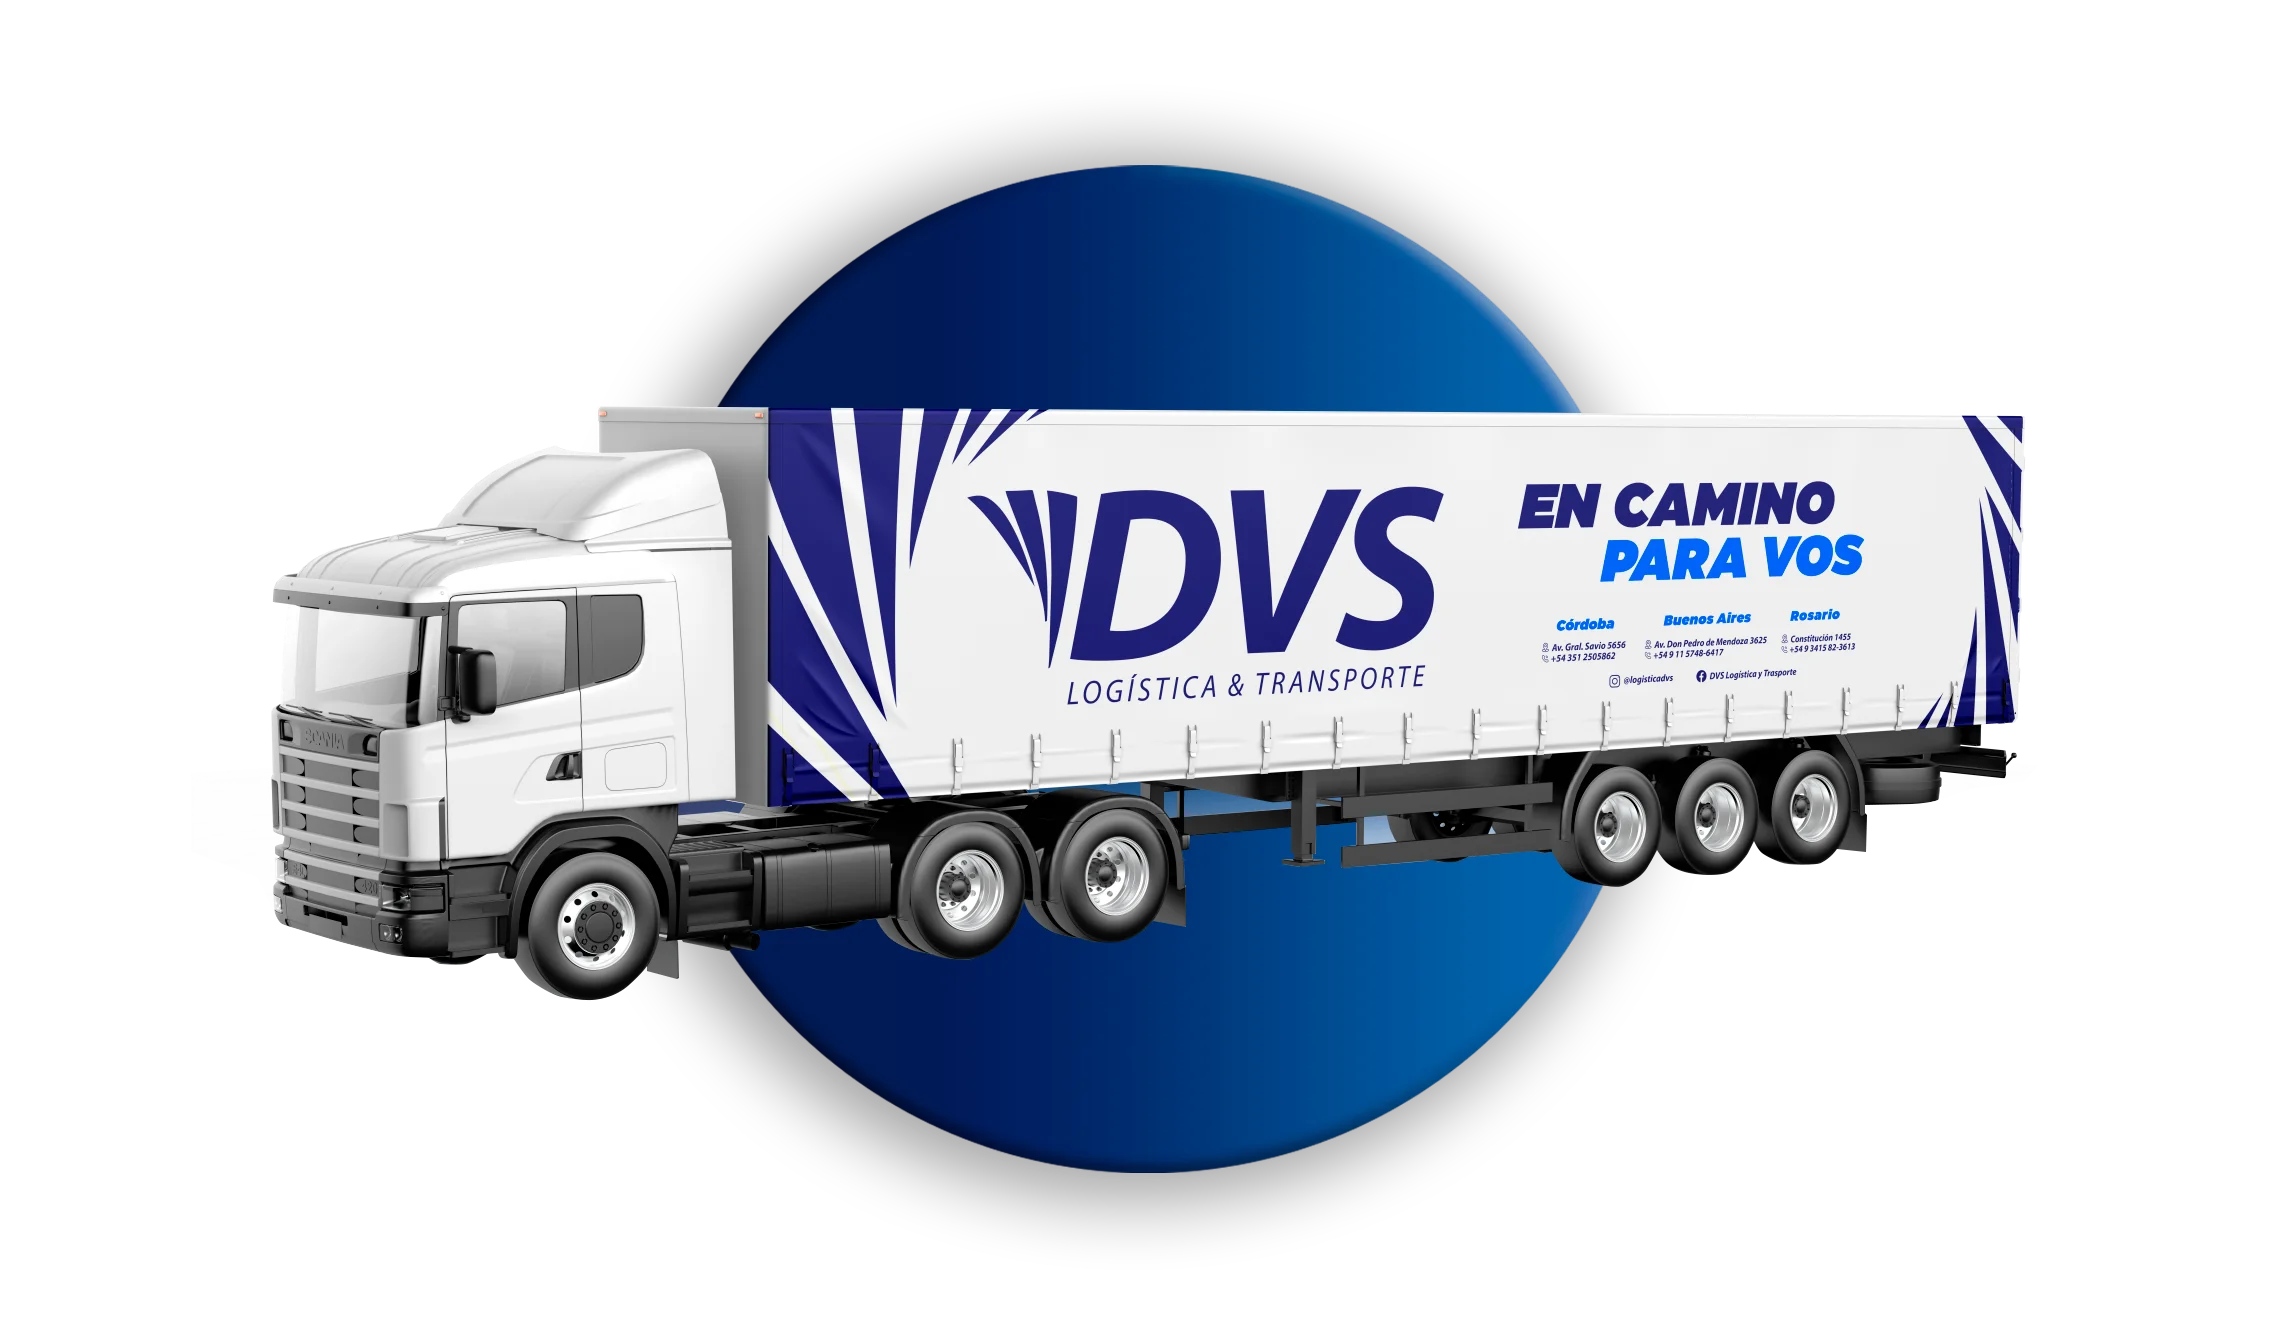 Transporte - DVS Logística y Transporte